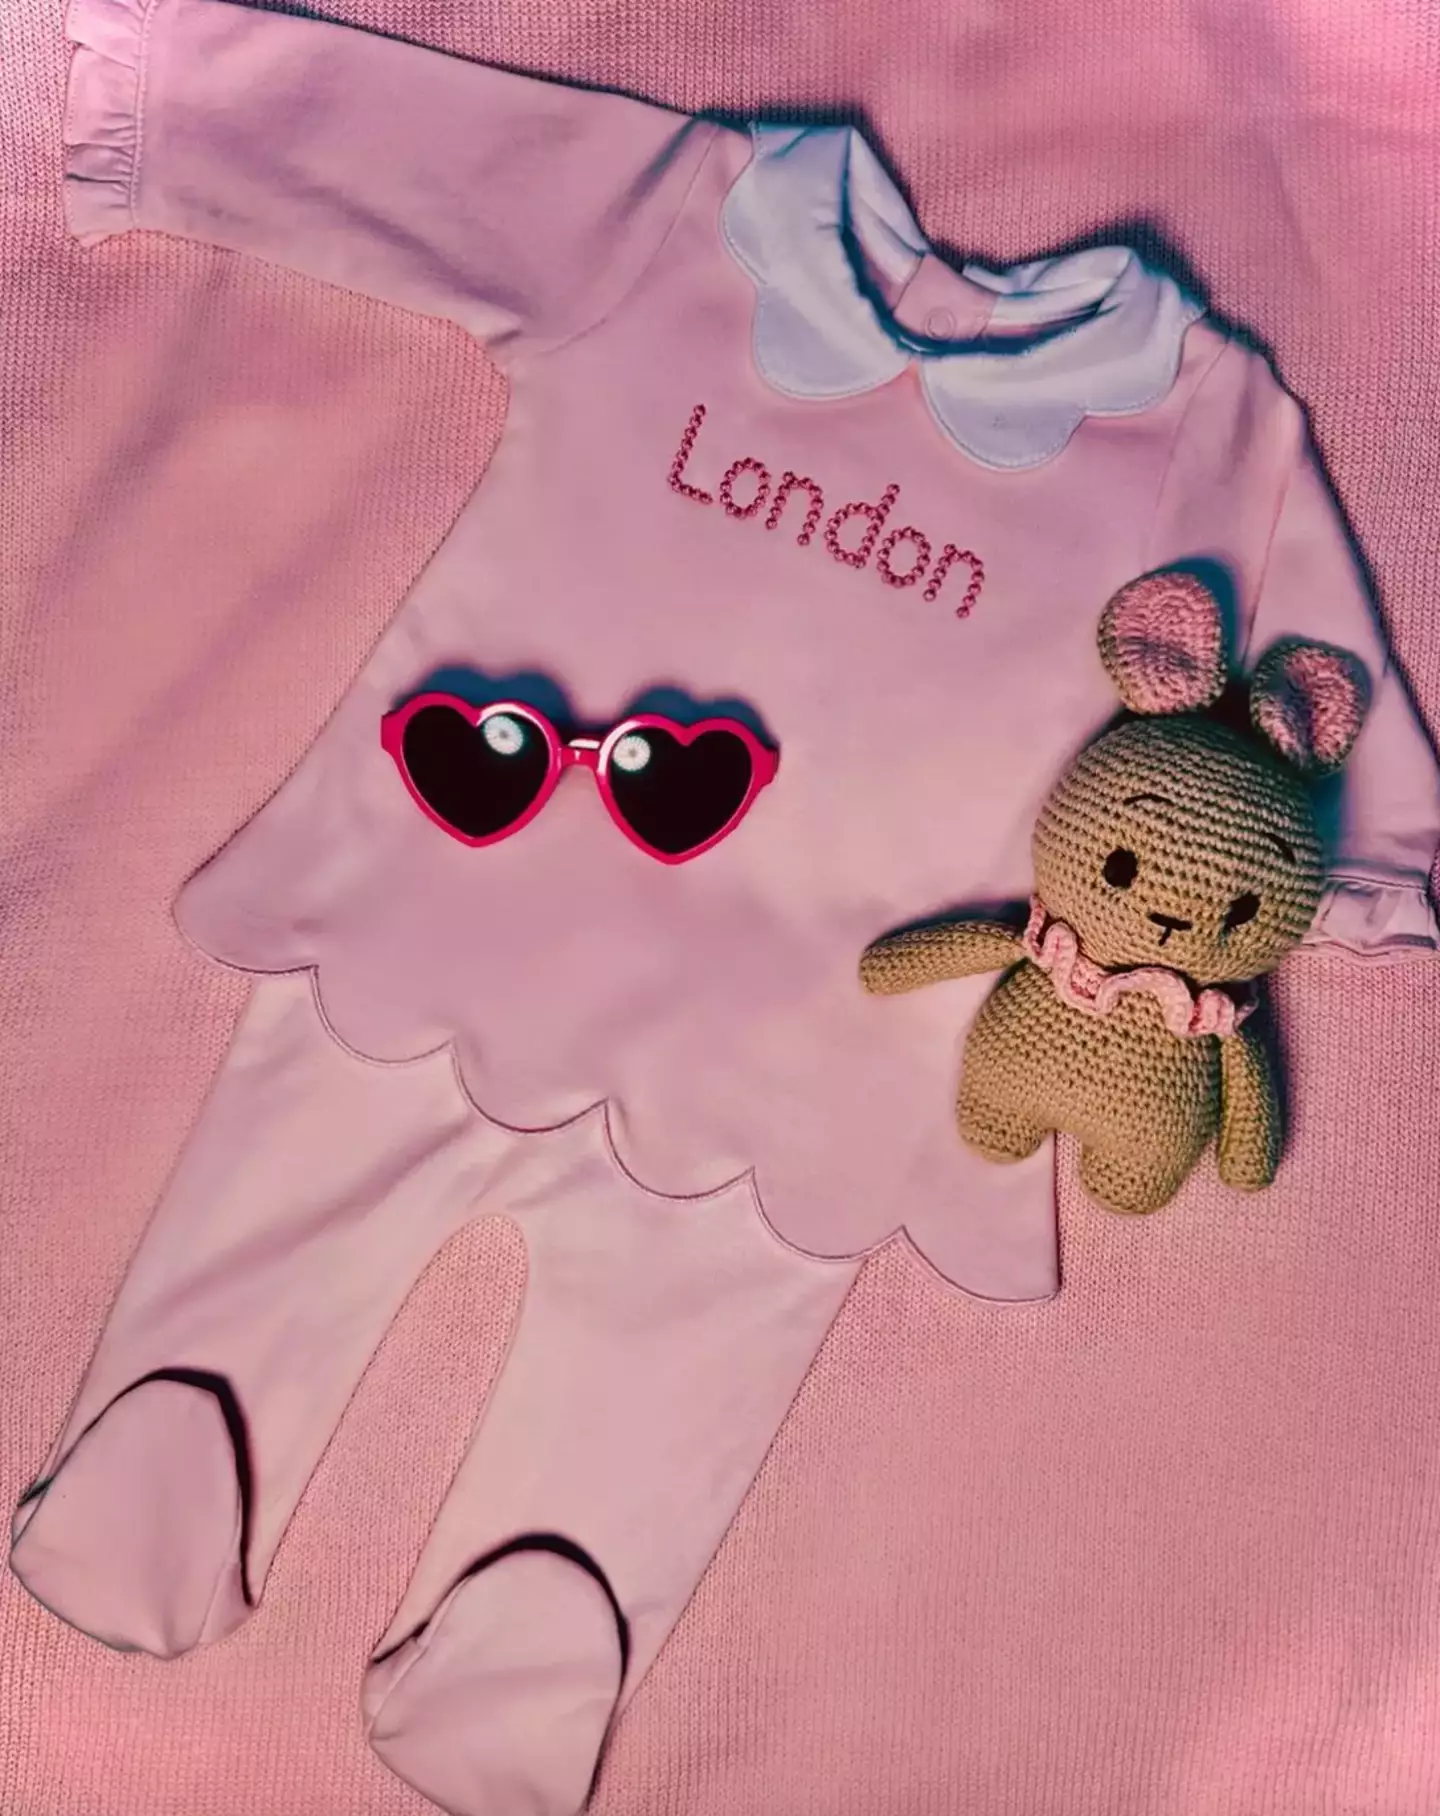 Paris welcomed daughter London last November (Instagram/@parishilton)